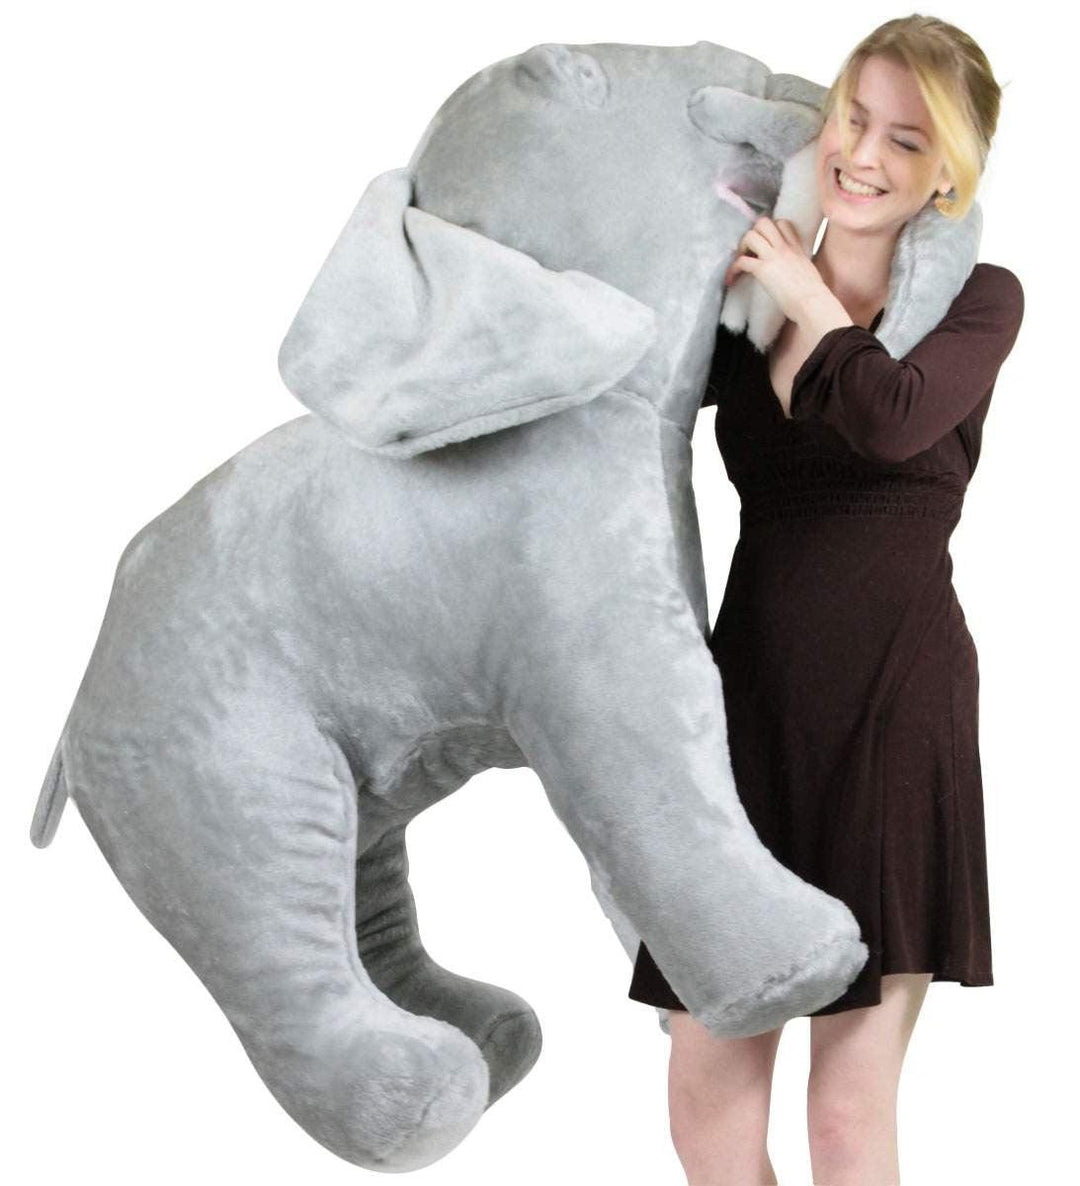 American Made Giant Stuffed Elephant 48 Inch Soft Big Plush Realistic - Brand My Case